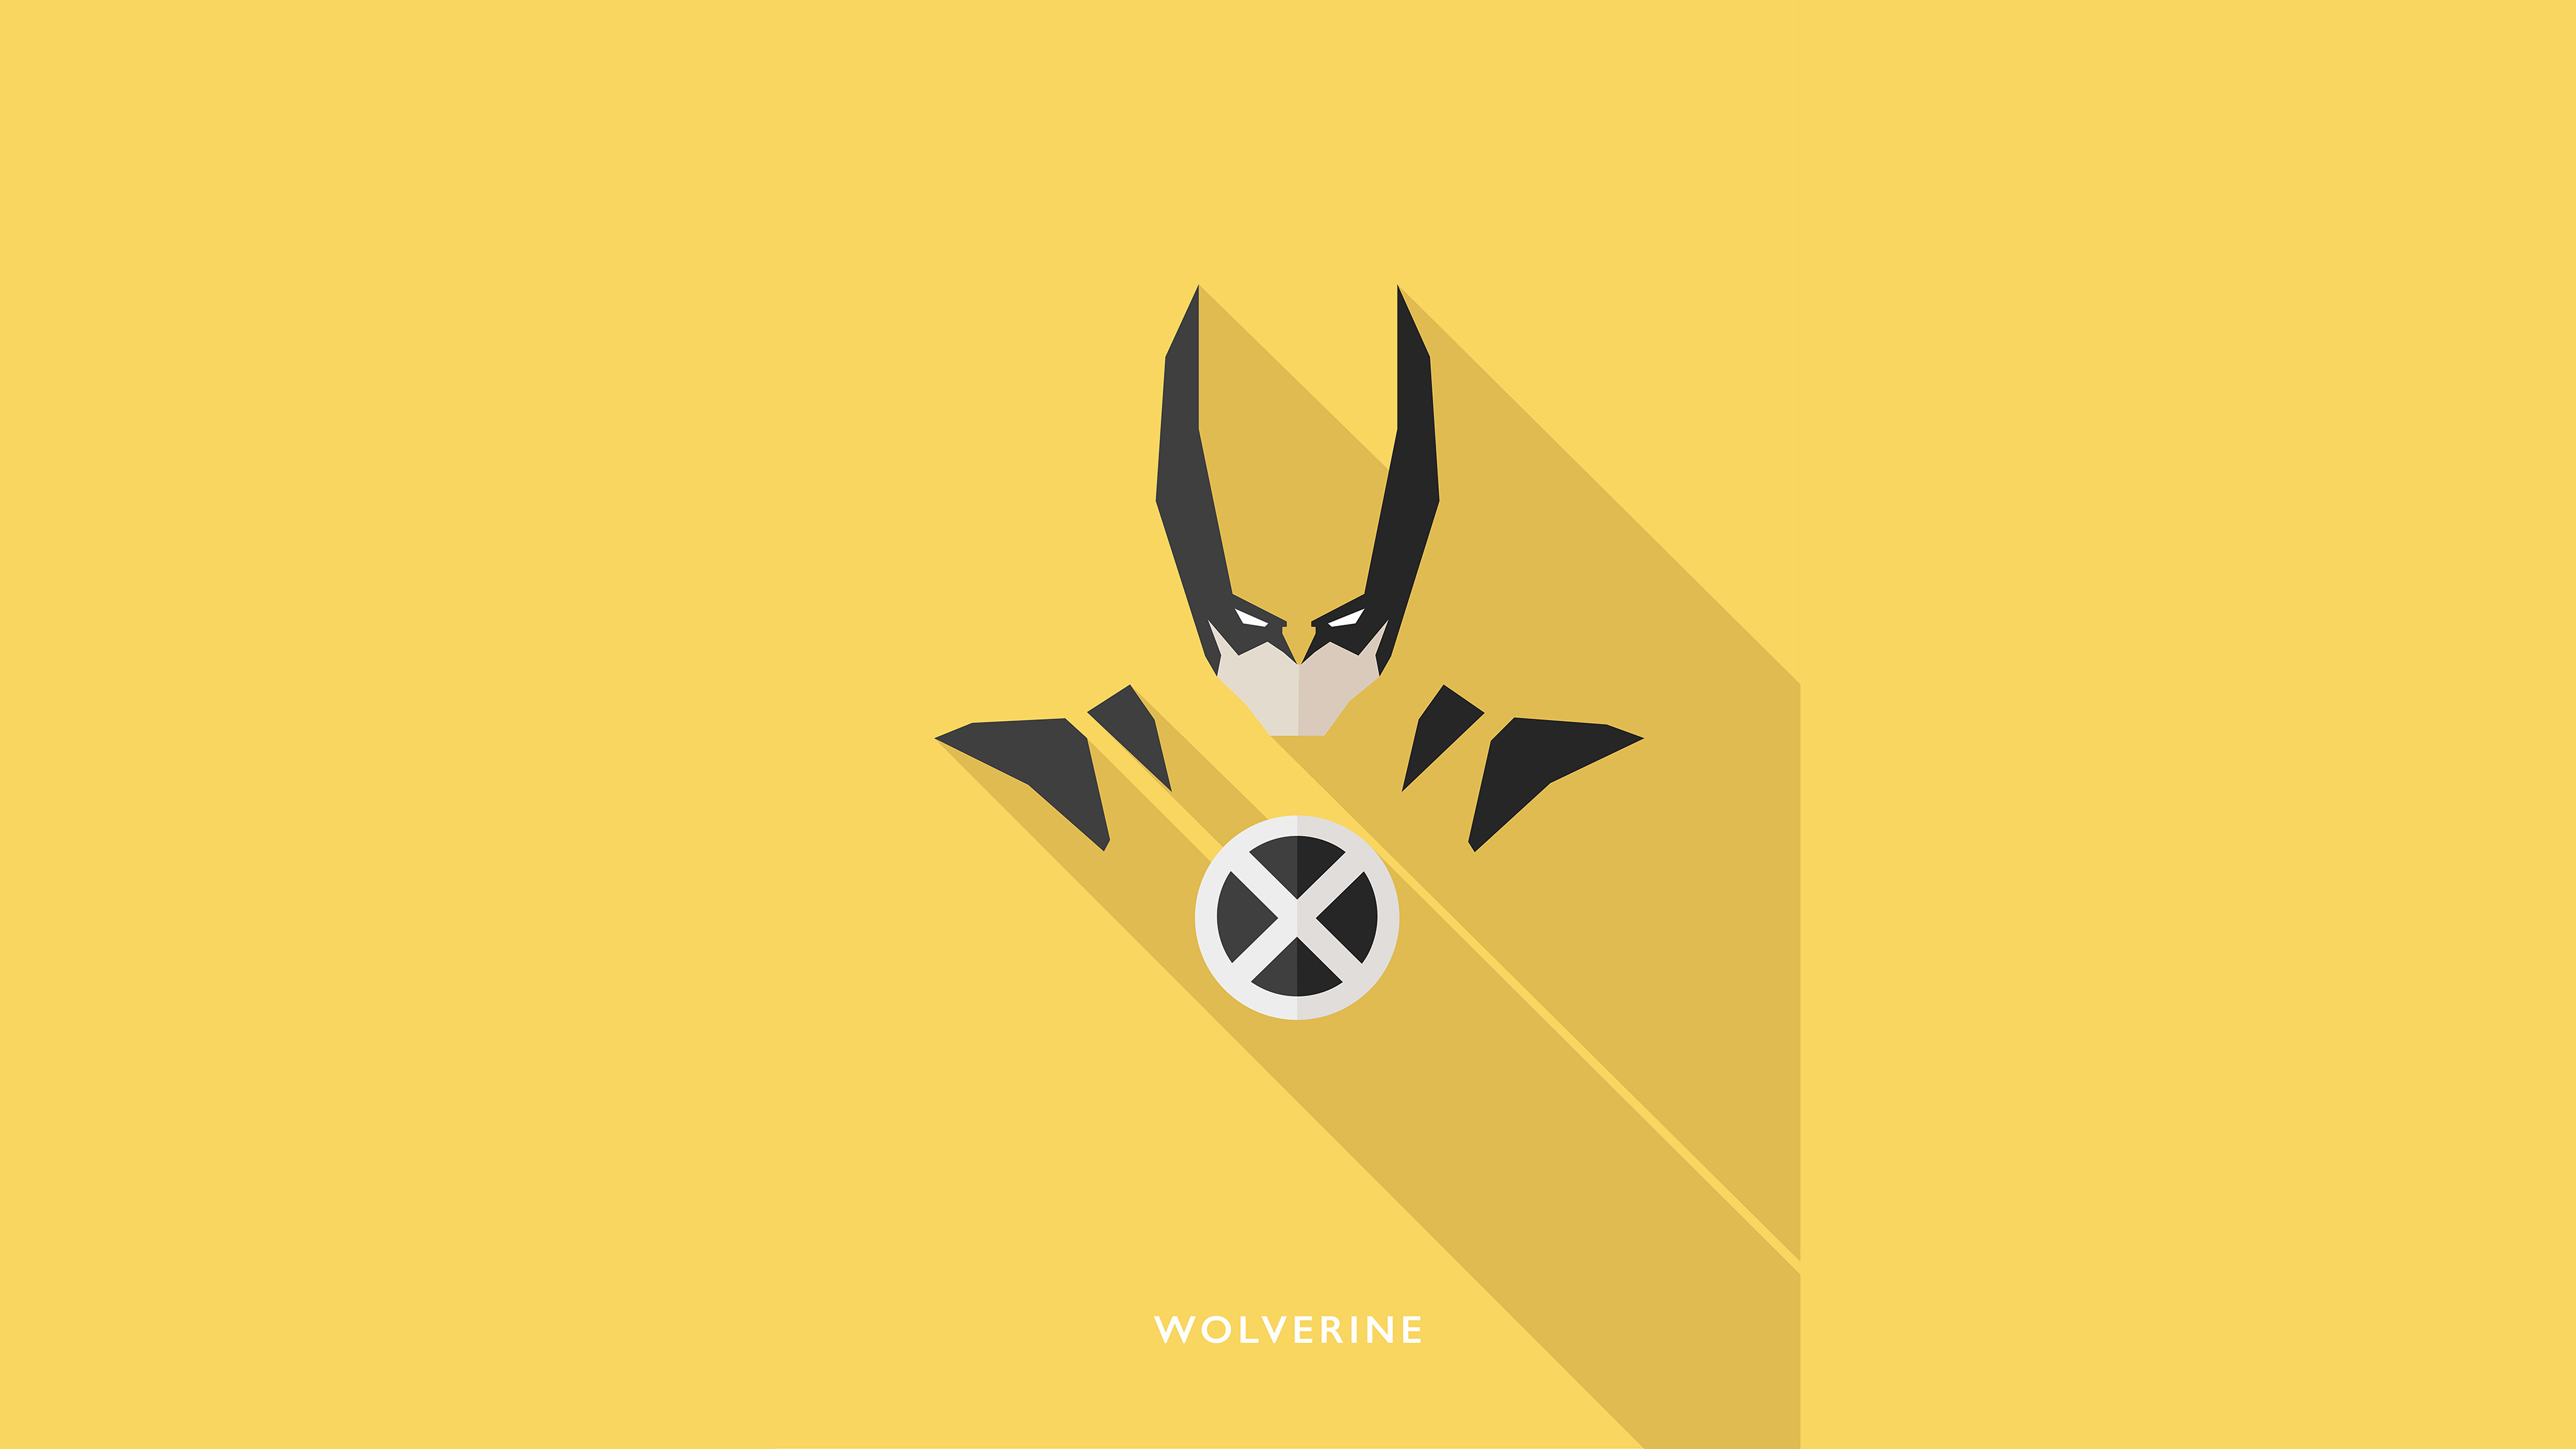 Comics Wolverine 4k Ultra HD Wallpaper by Jarno van der Geest